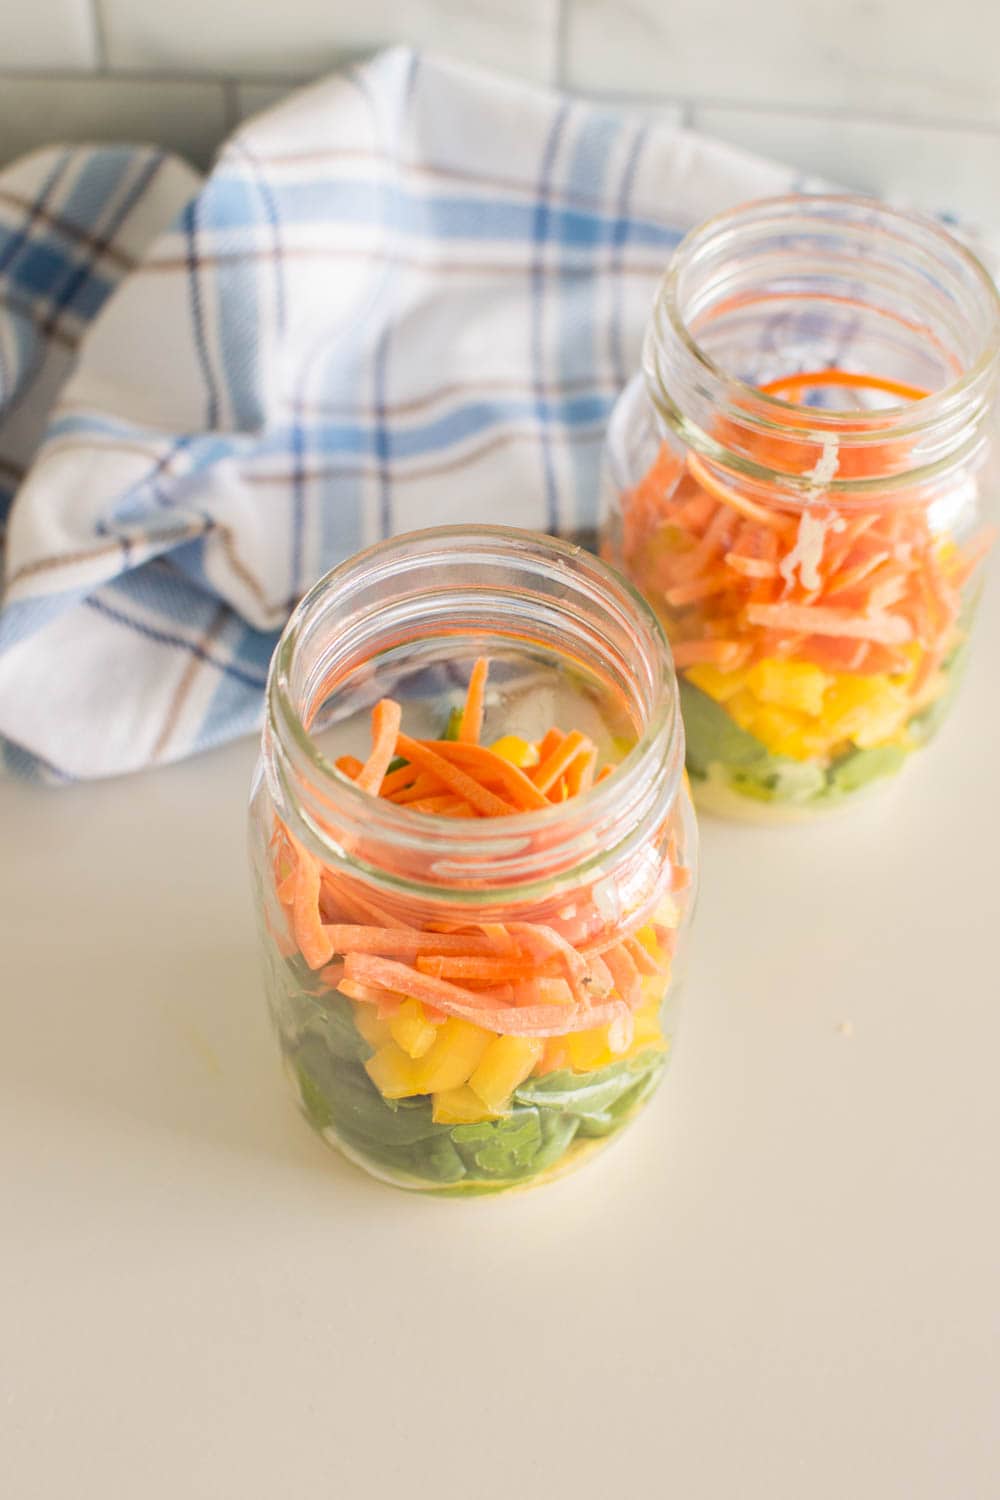 Layering vegetables in a mason jar